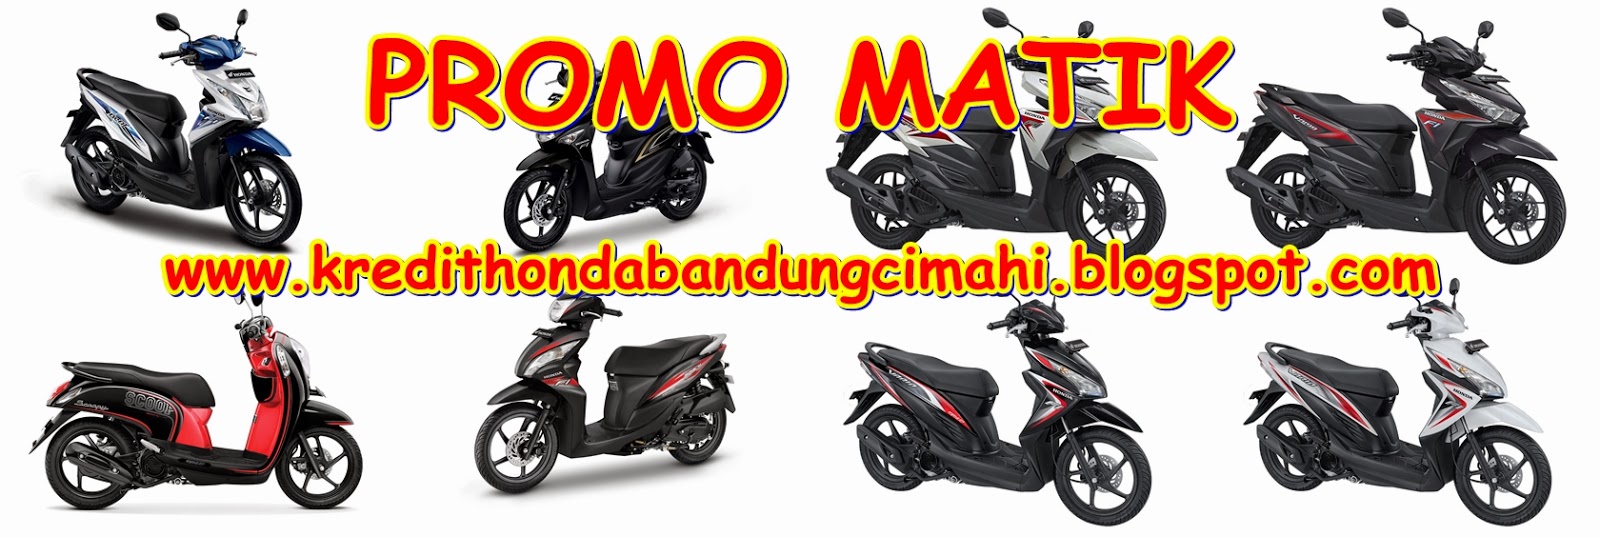 Kredit Sepeda Motor Honda Bandung Cimahi PROMO MATIK